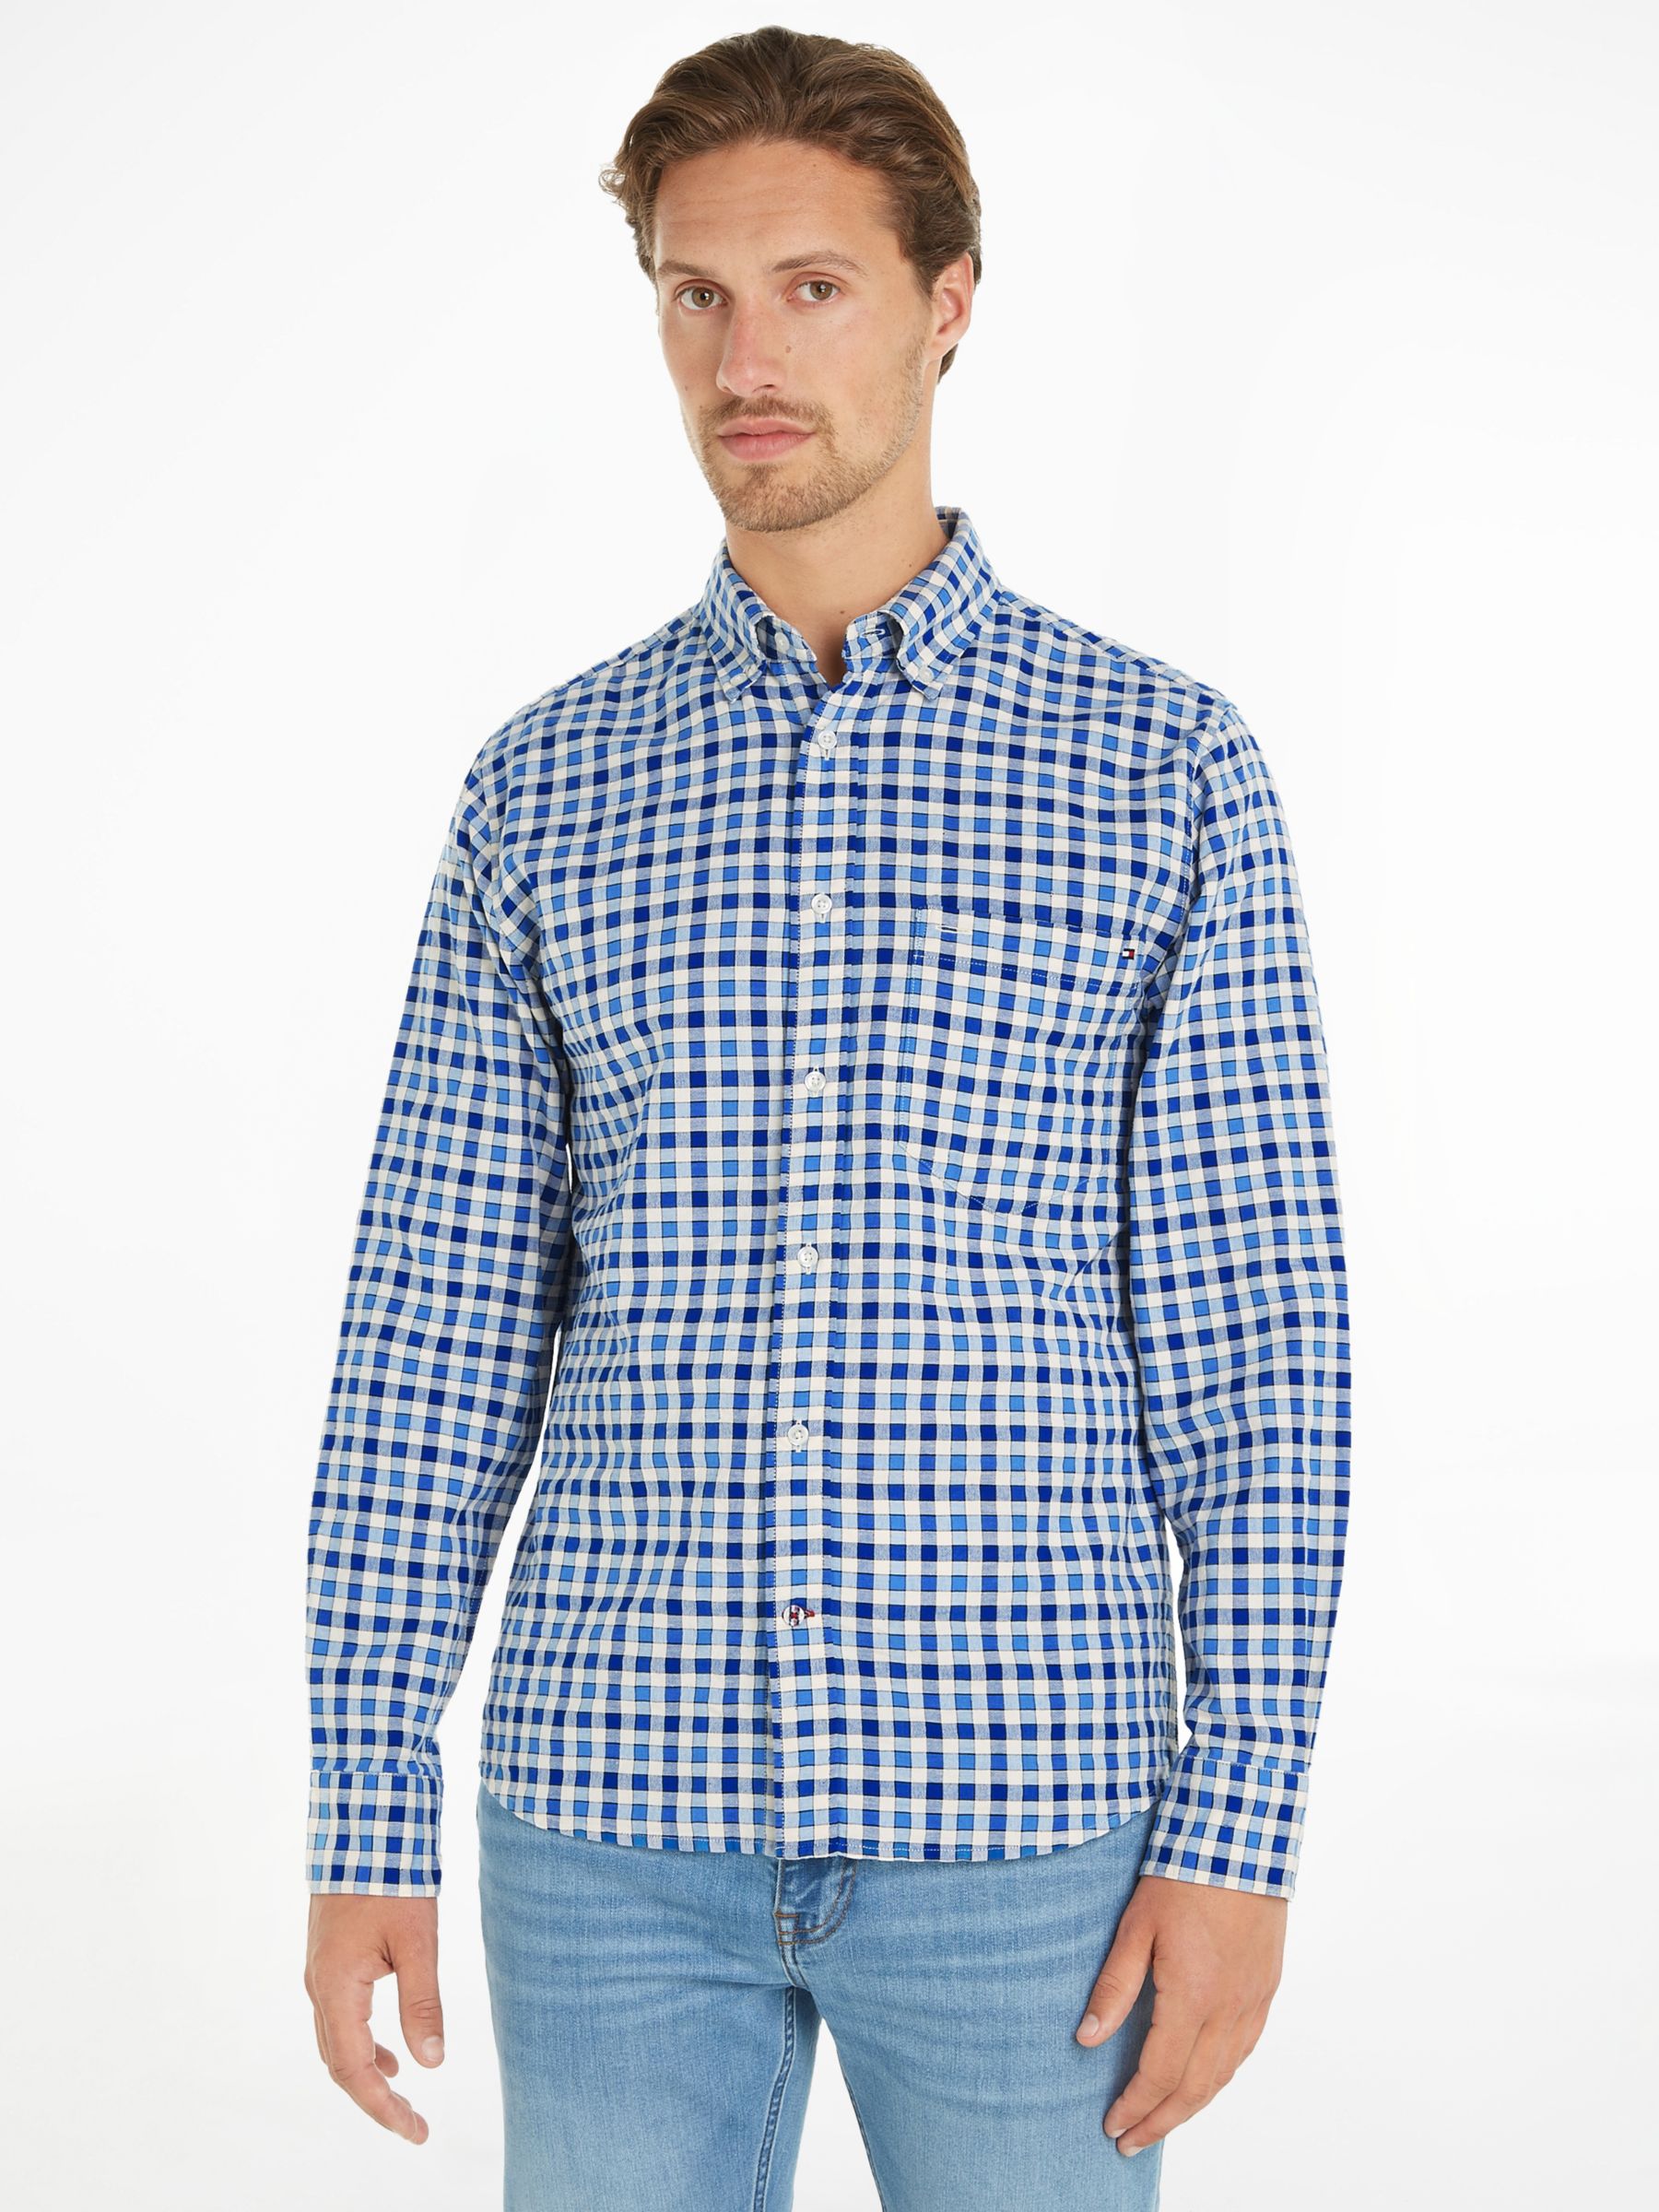 Tommy Hilfiger Oxford Gingham Long Sleeve Shirt, Blue/Multi, XS